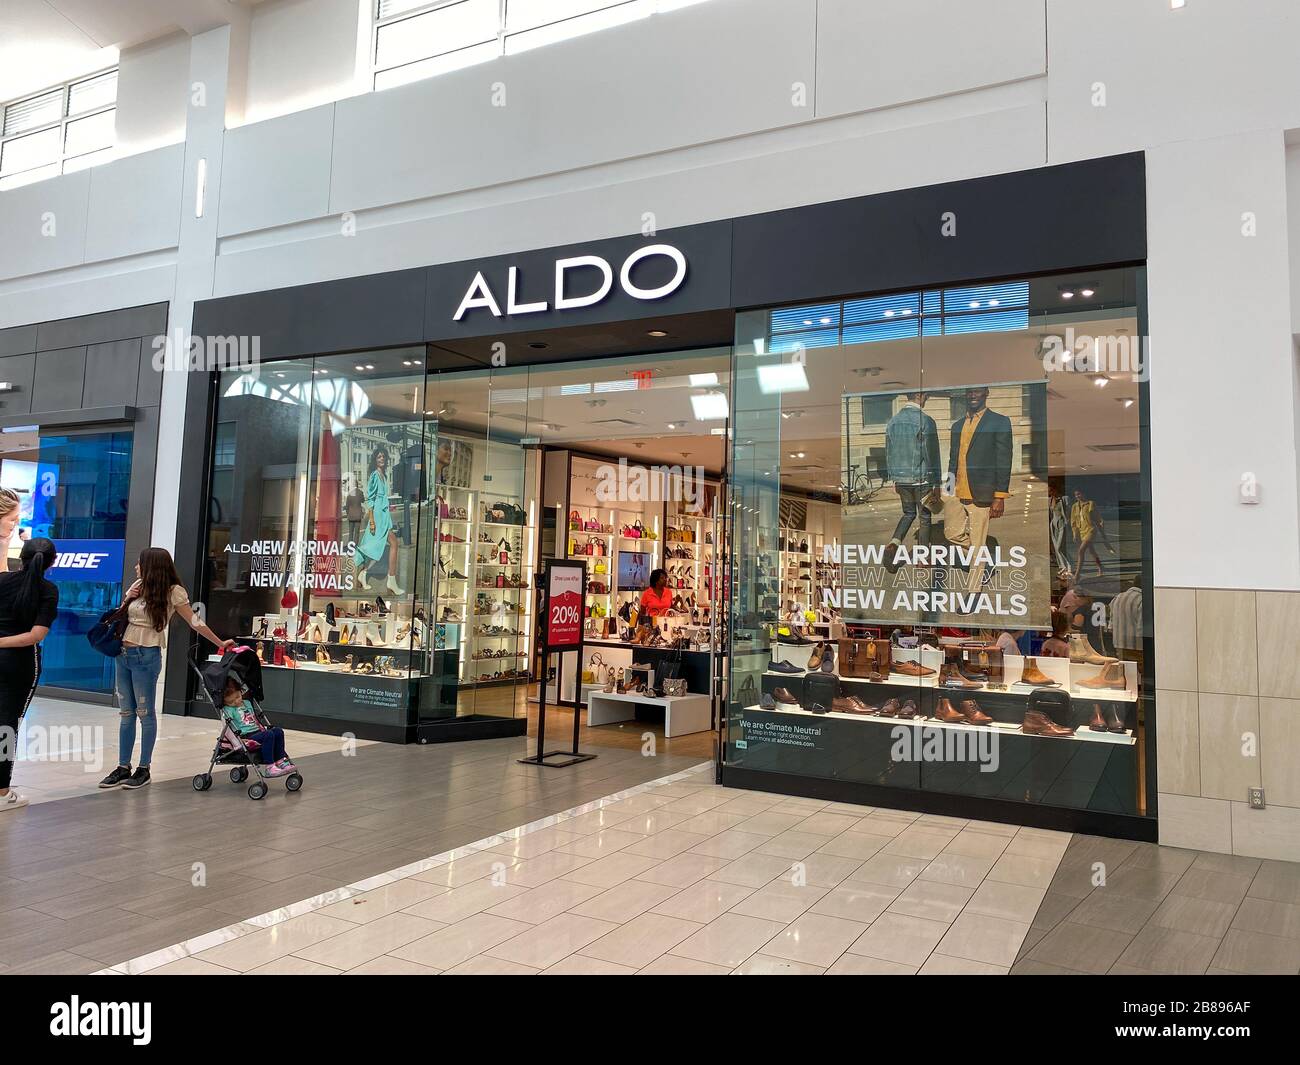 Orlando, FL/USA-2/17/20: An Aldo retail fashion and accessories store in an indoor in Orlando, FL Stock Photo Alamy